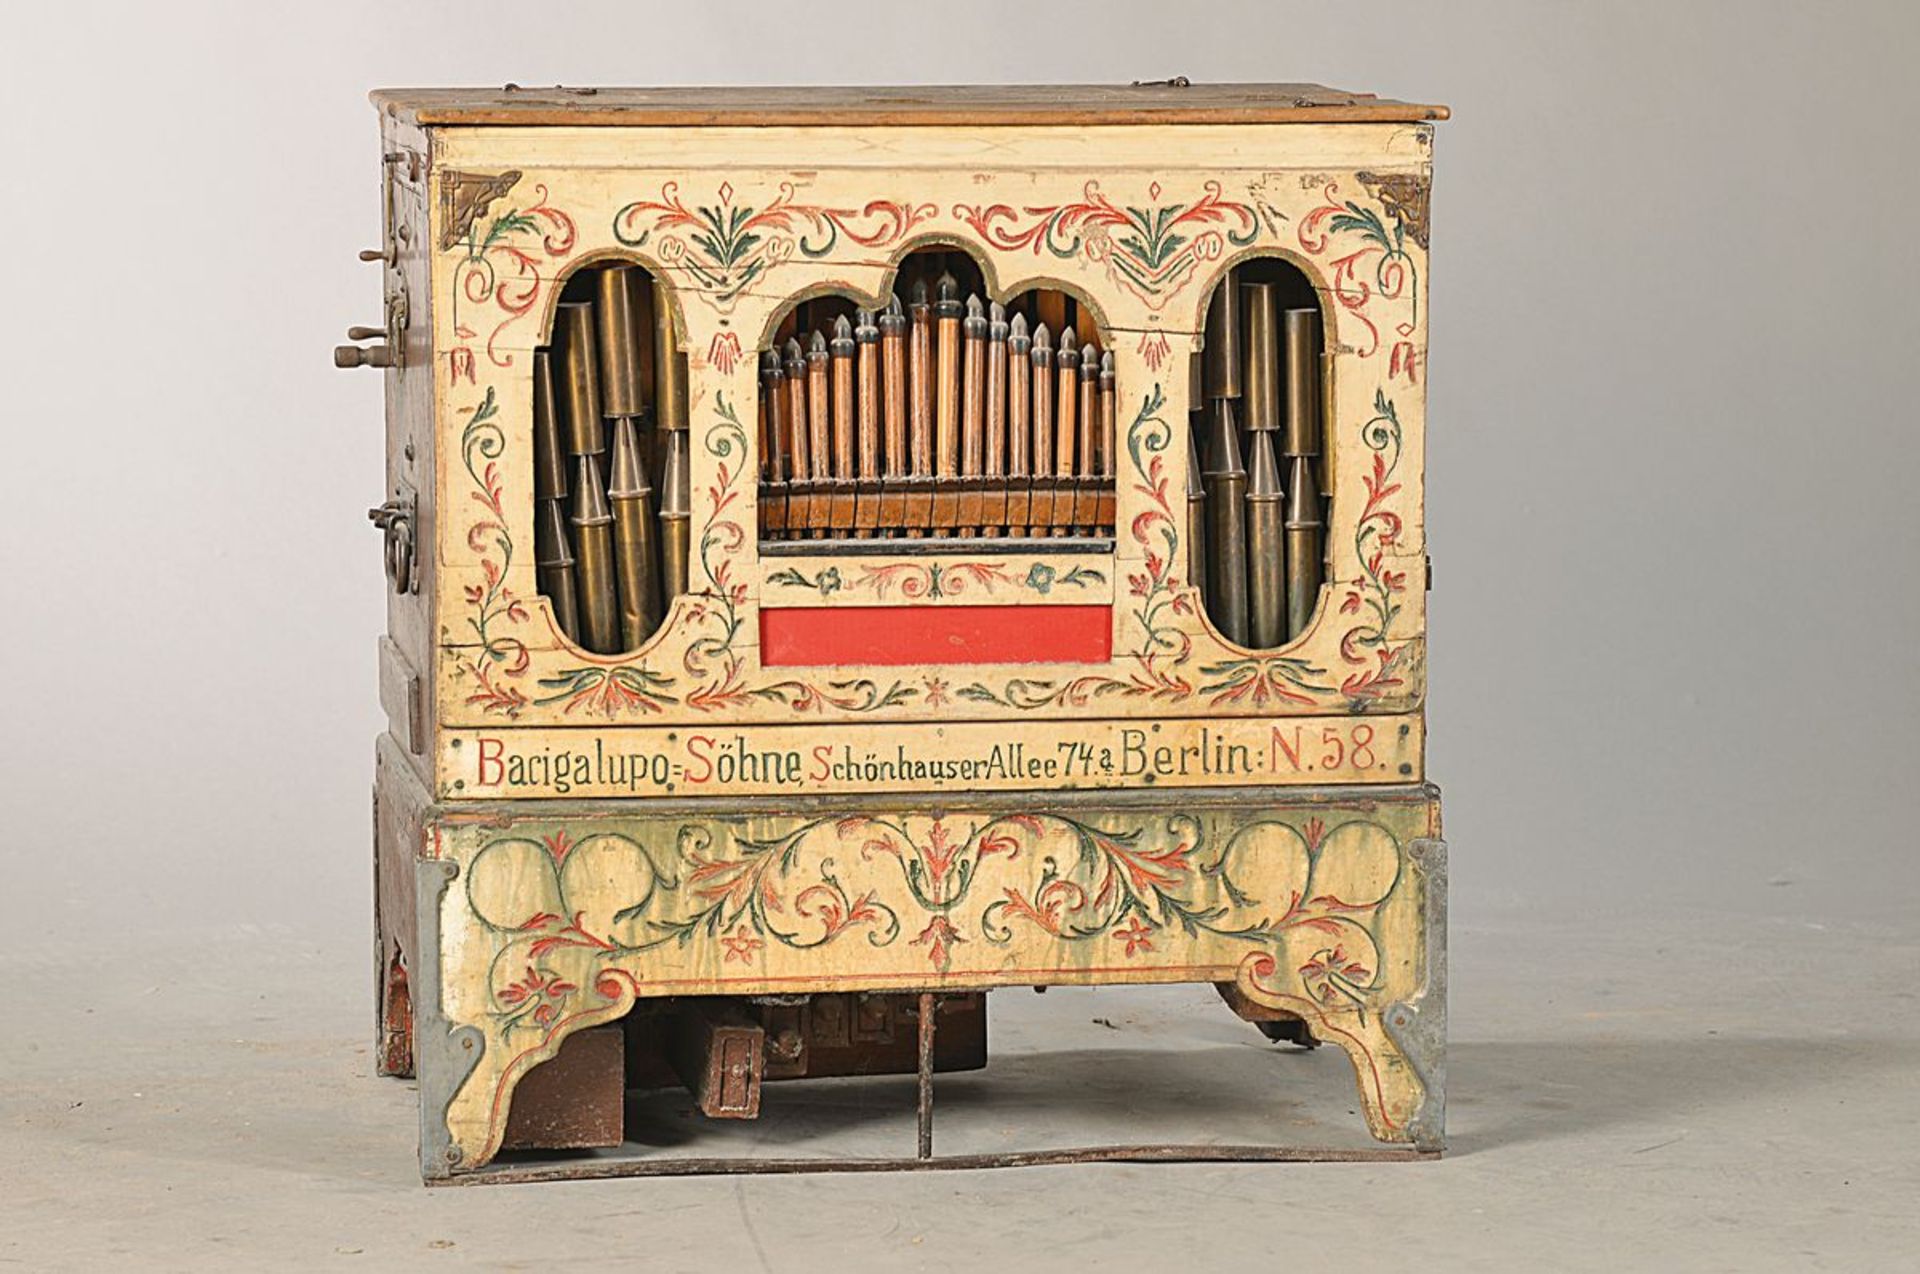 Berlin hurdy-gurdy, Bacigalup & Sons, Berlin, Orgelfarbrik, No. 58, around 1890, rolling musical